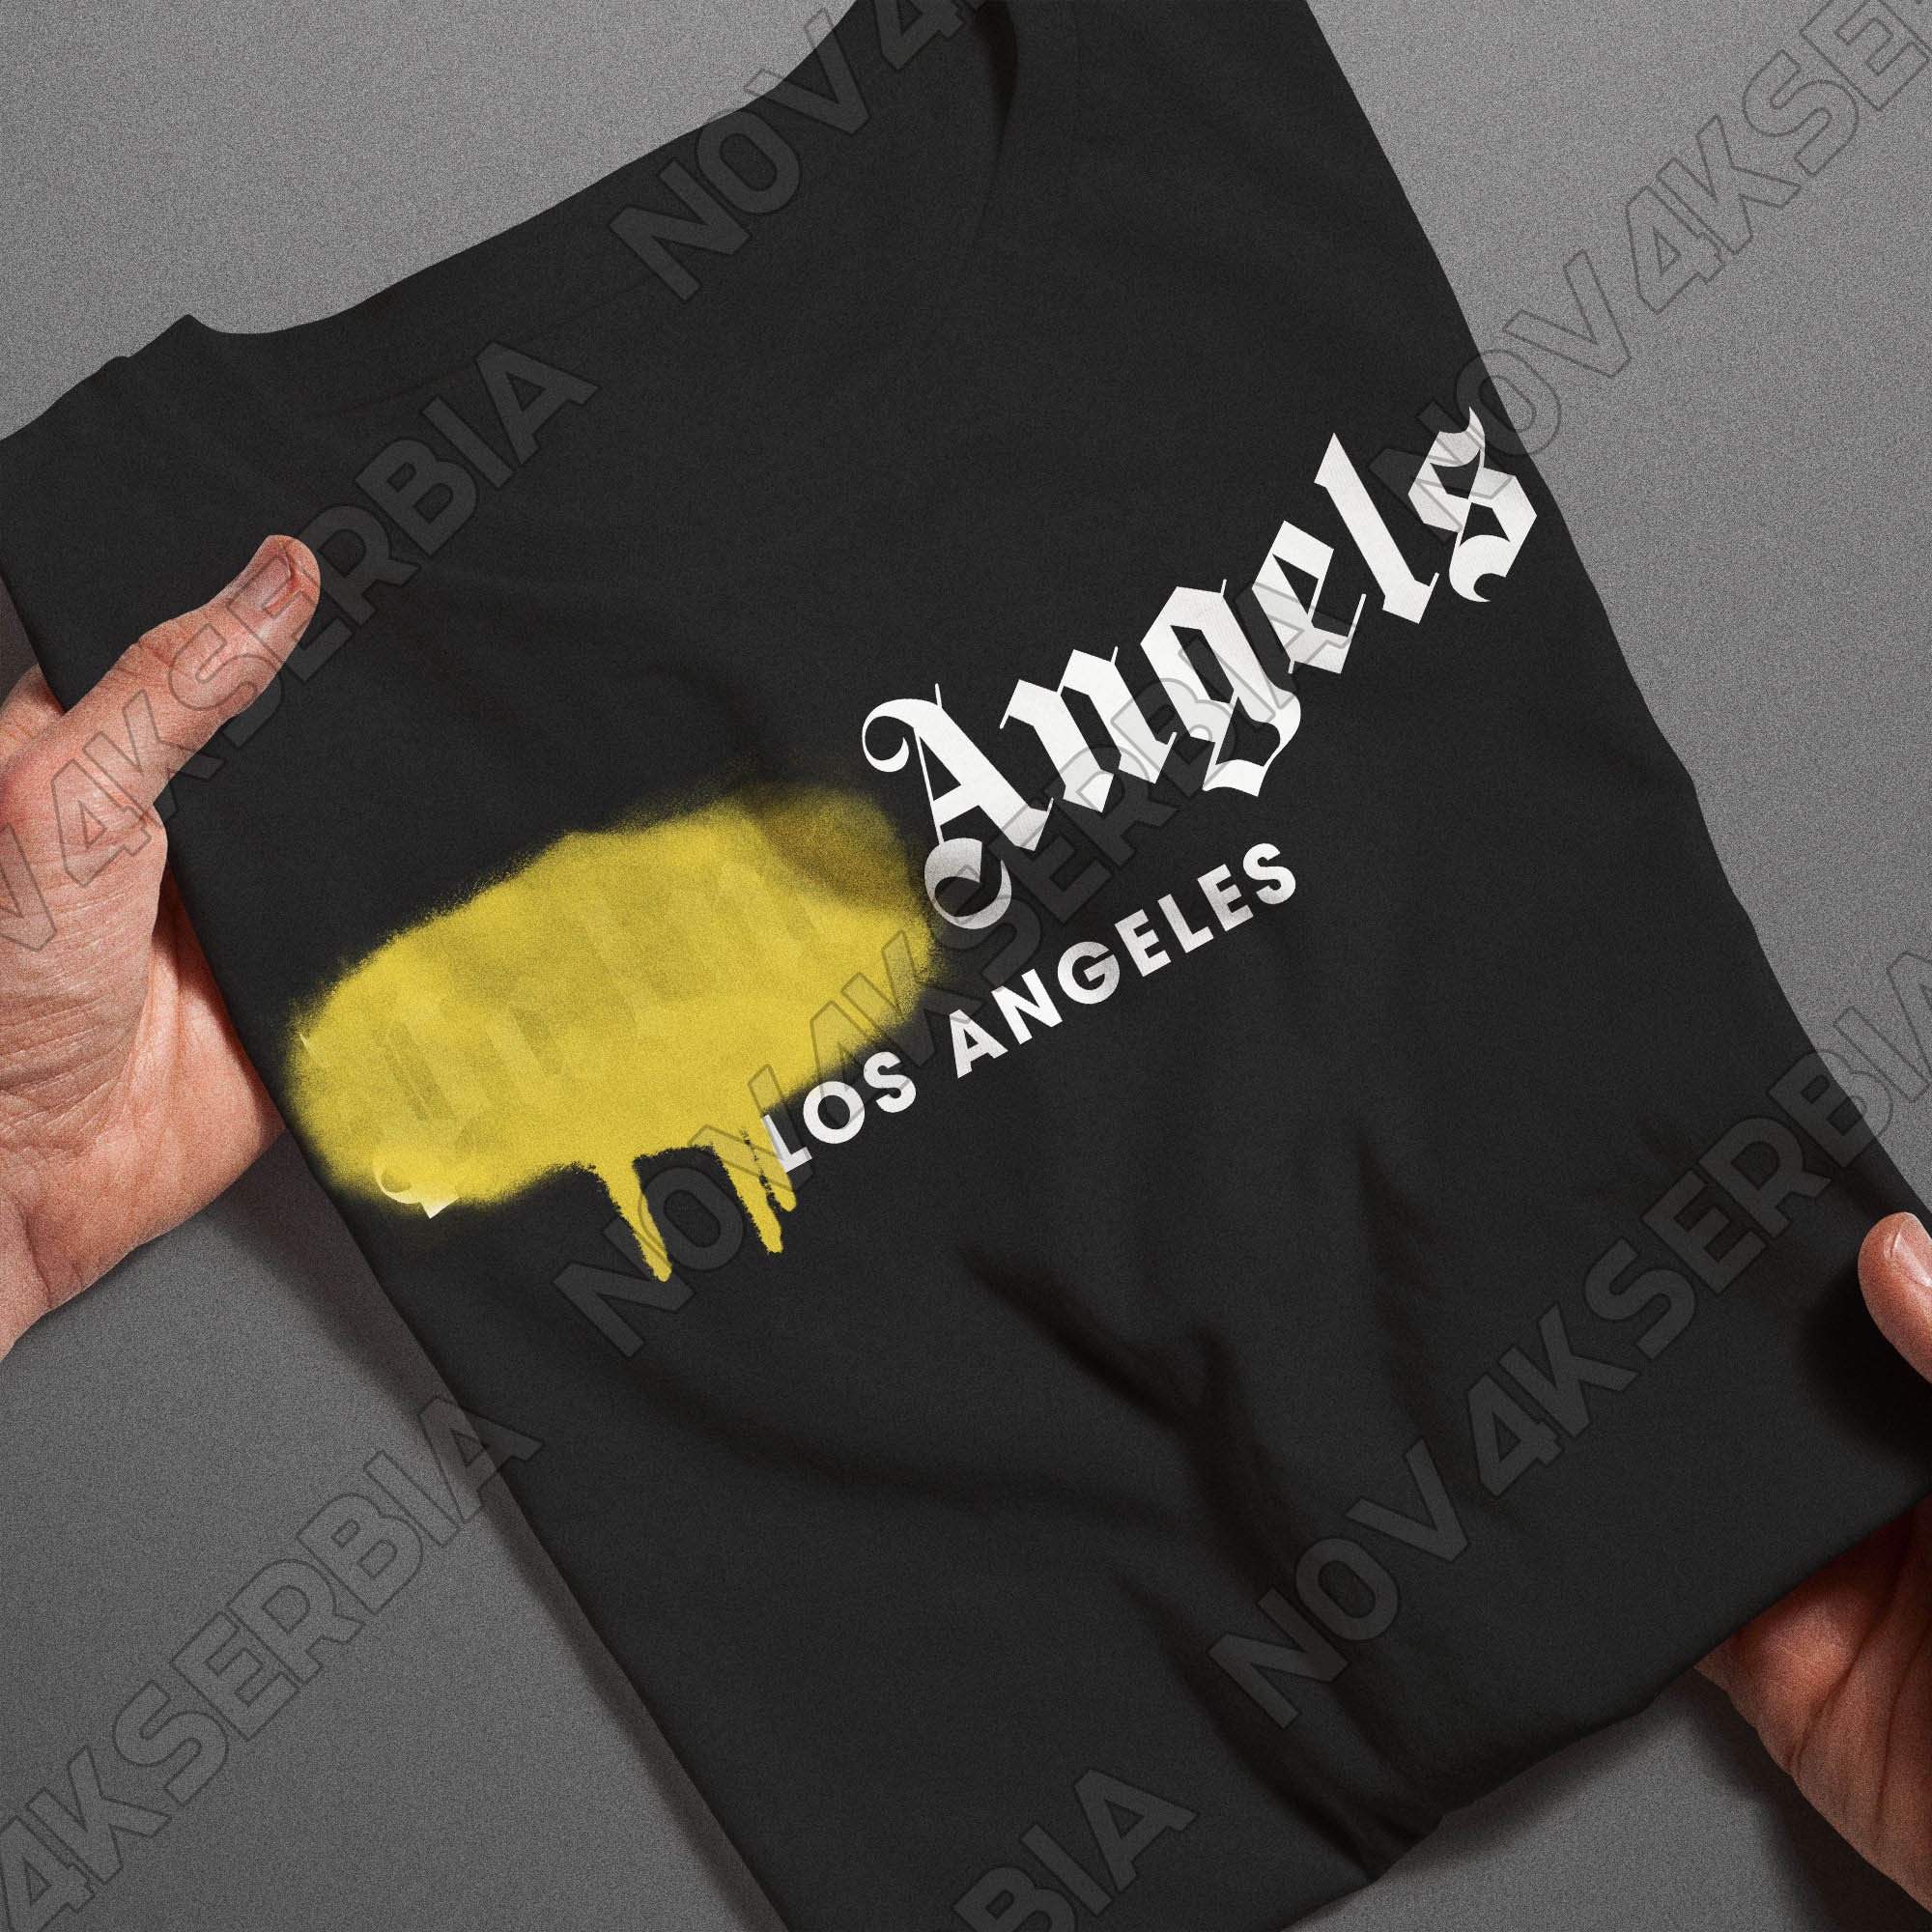 n0v4kserbia Palm Angels Los Angeles Unisex T- Shirt